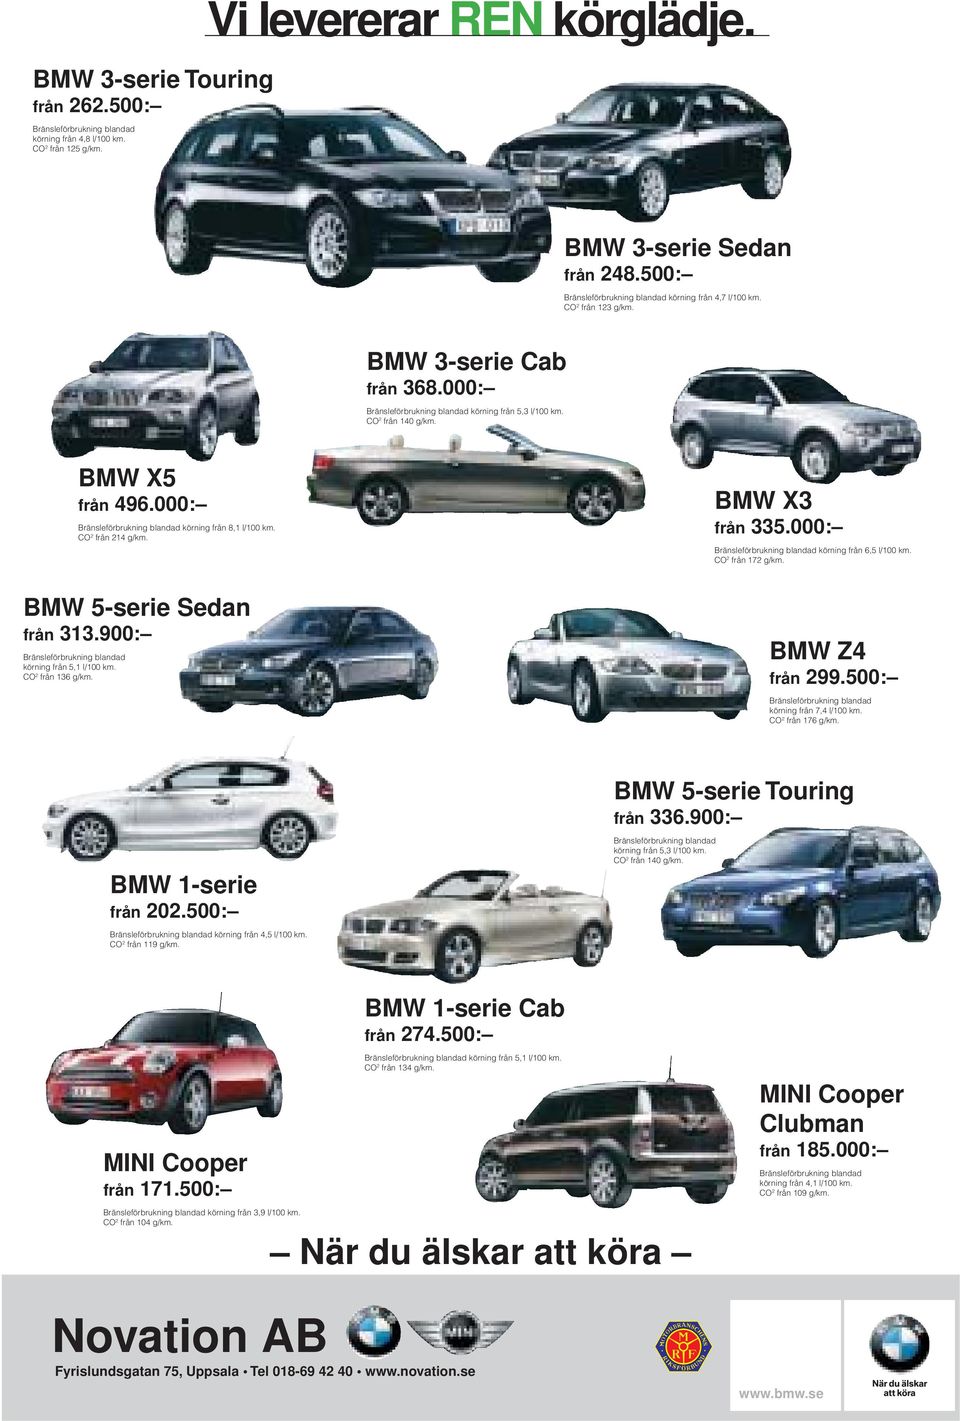 BMW 5-serie Sedan från 313.900: Bränsleförbrukning blandad körning från 5,1 l/100 km. CO 2 från 136 g/km. BMW X5 från 496.000: Bränsleförbrukning blandad körning från 8,1 l/100 km. CO 2 från 214 g/km.